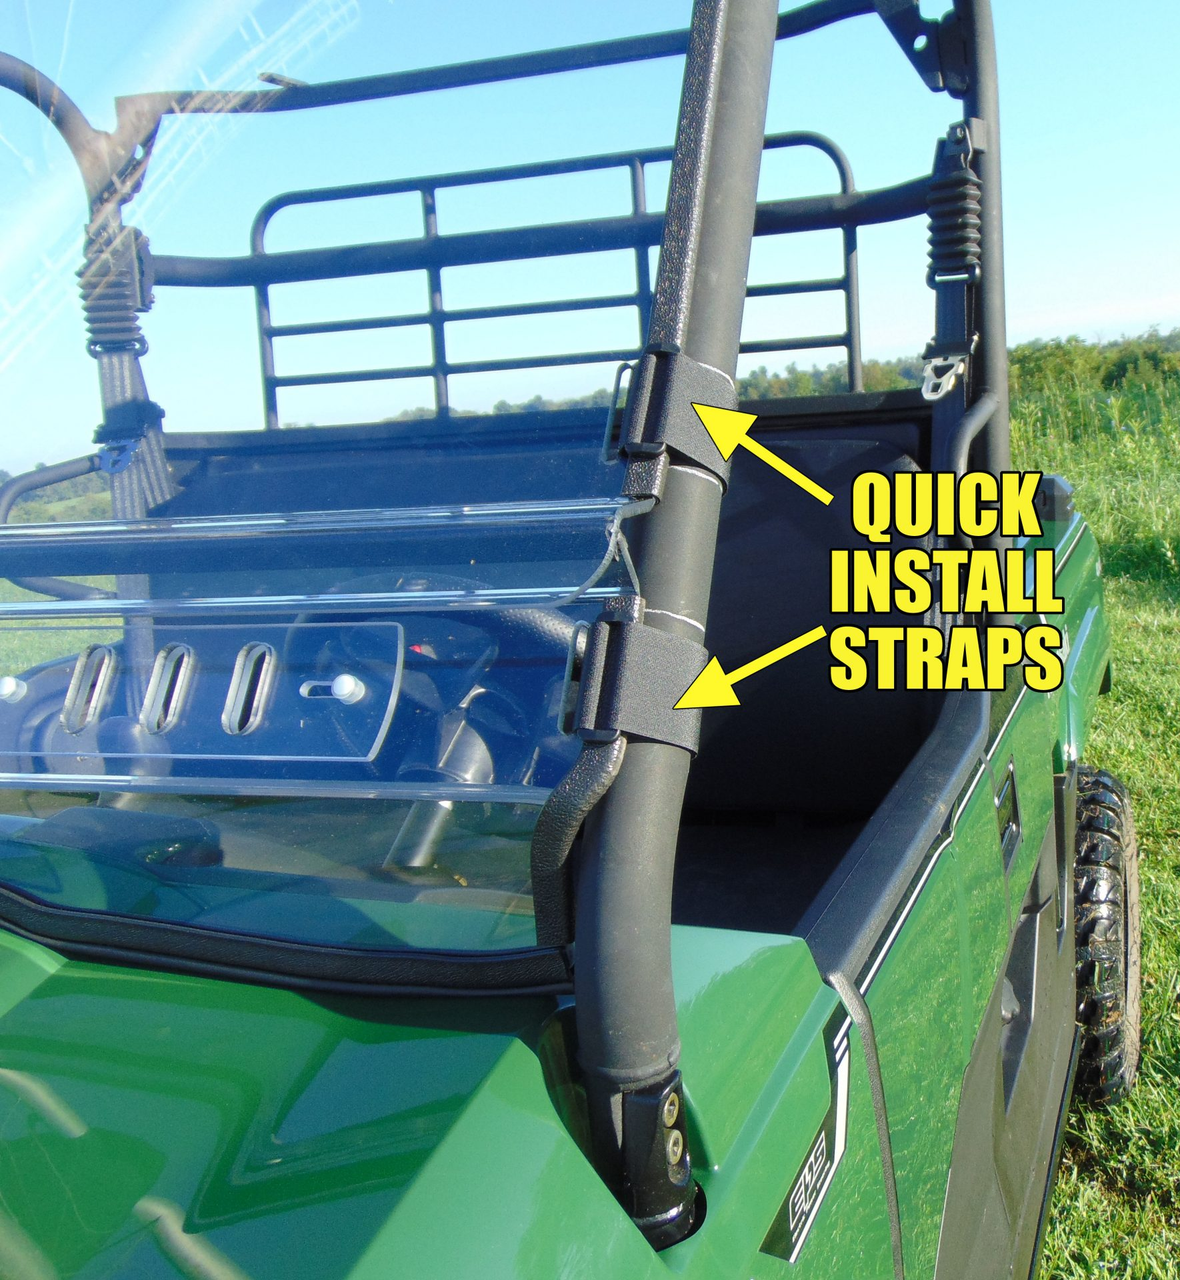 3 Star side x side accessories John Deere Gator HPX/XUV polycarbonate rear window quick install straps